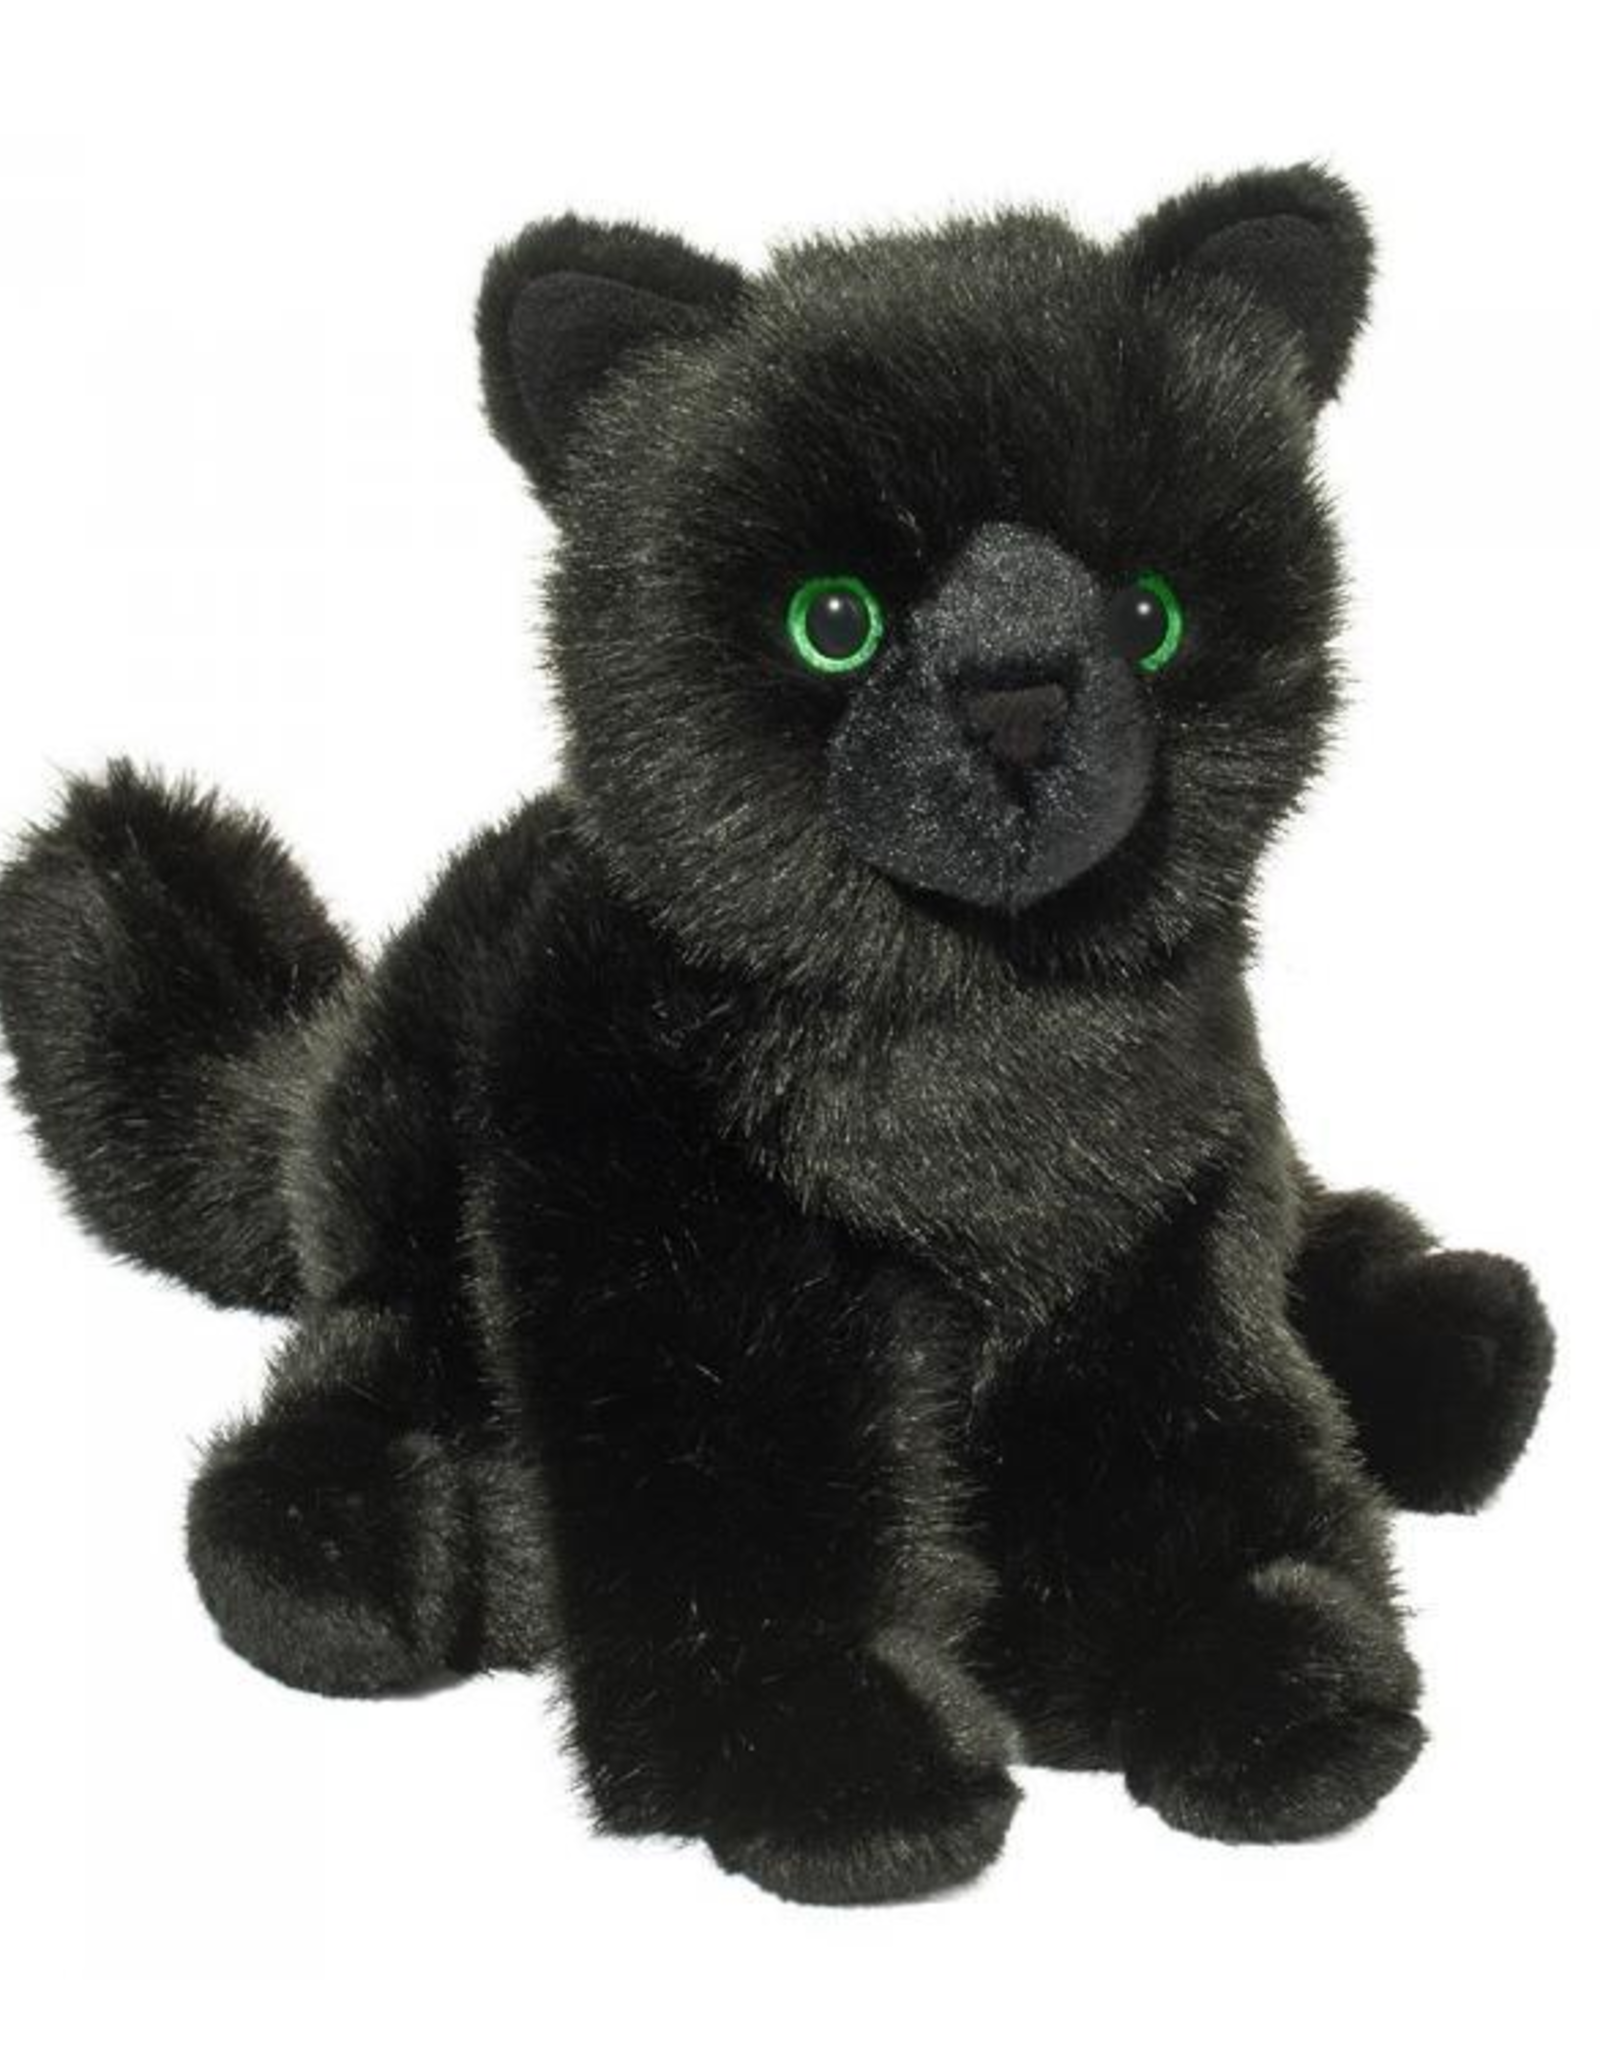 Douglas Douglas - Salem Black Cat (Sitting)